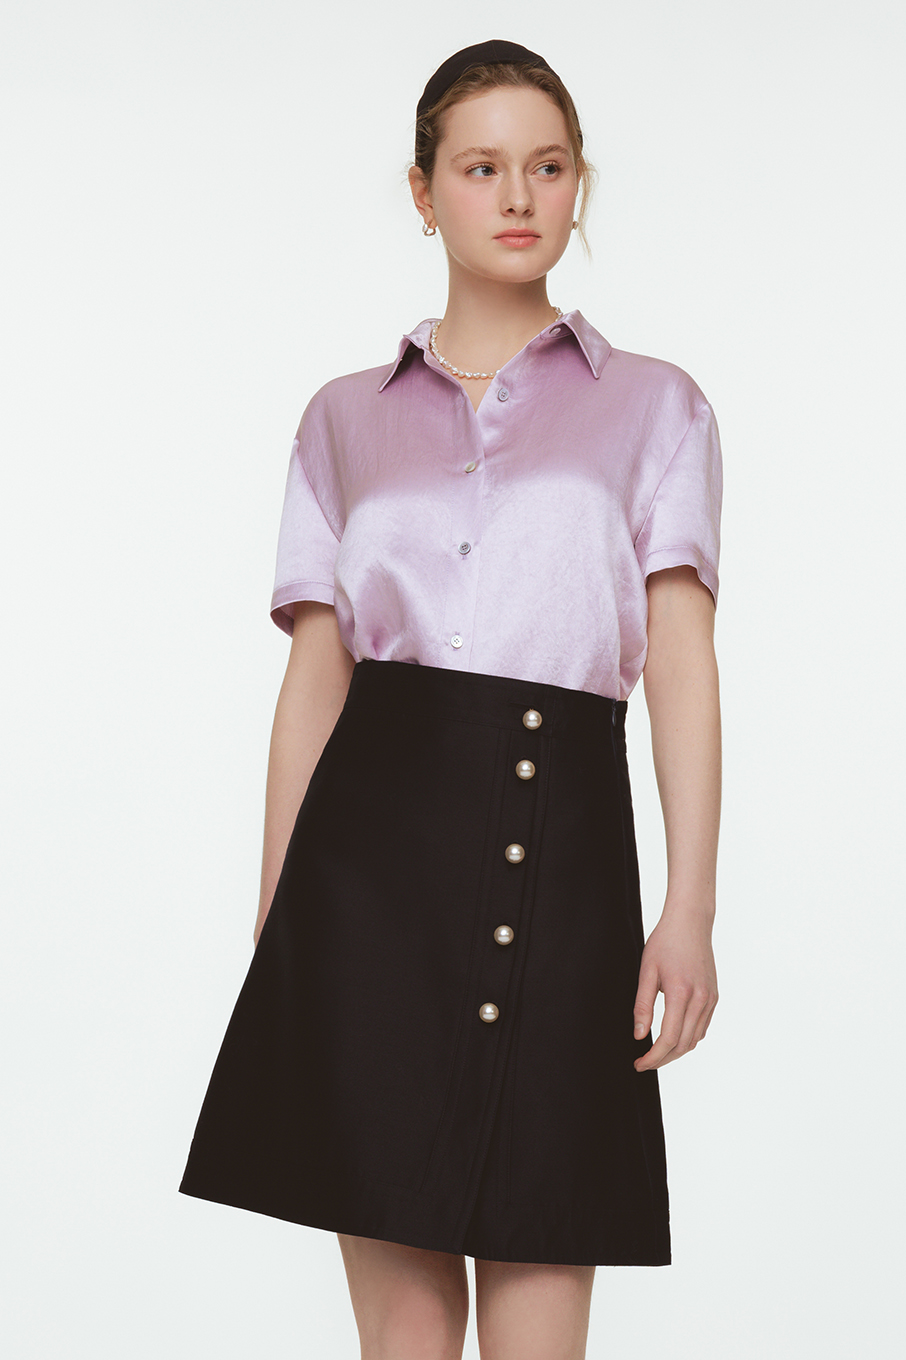 Kira skirt (Navy) 2차 판매 완료 3차 리오더